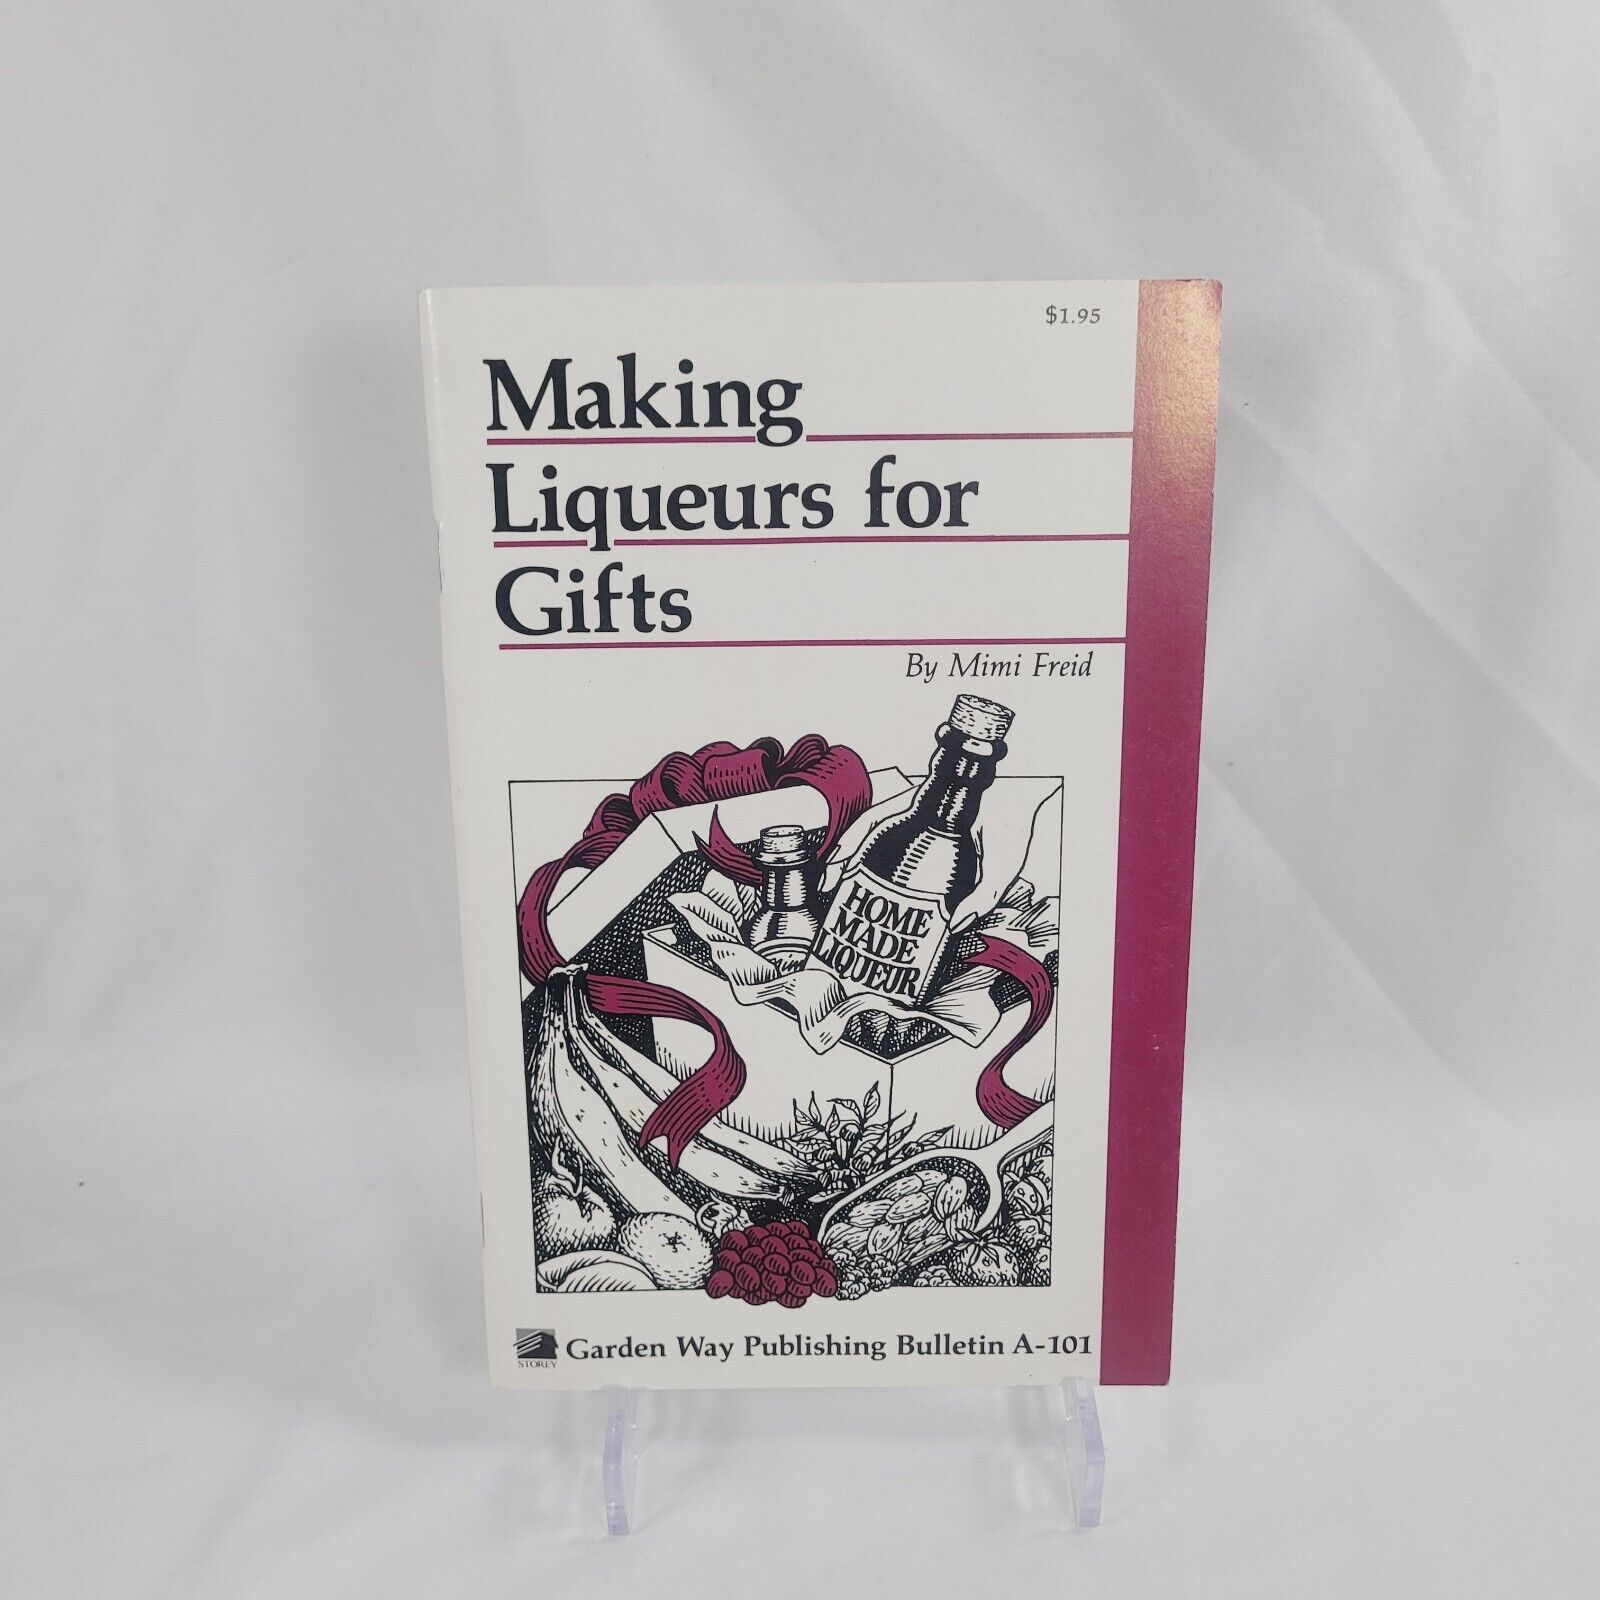 Making Liqueurs for Gifts Mimi Freid 1988 Booklet Alcohol Recipes Garden Way Pub